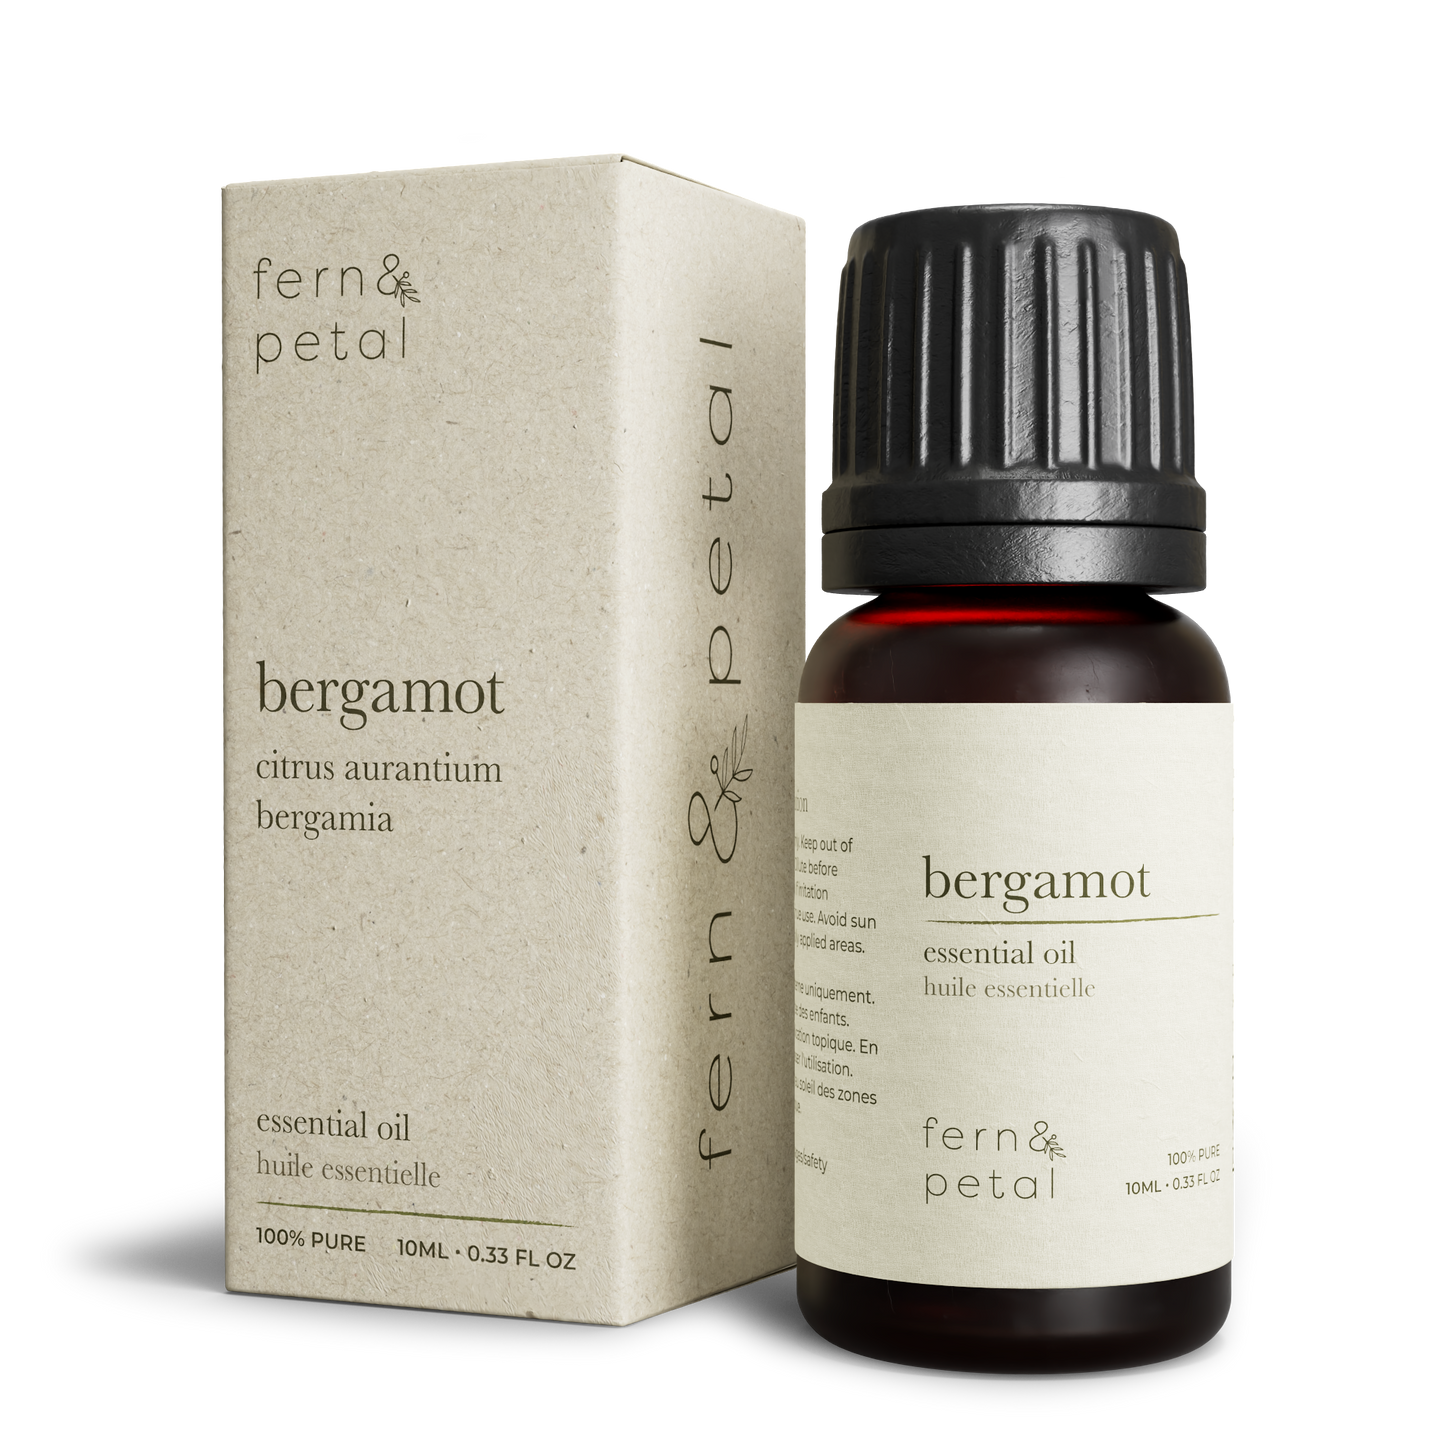 Fern & Petal | Bergamot